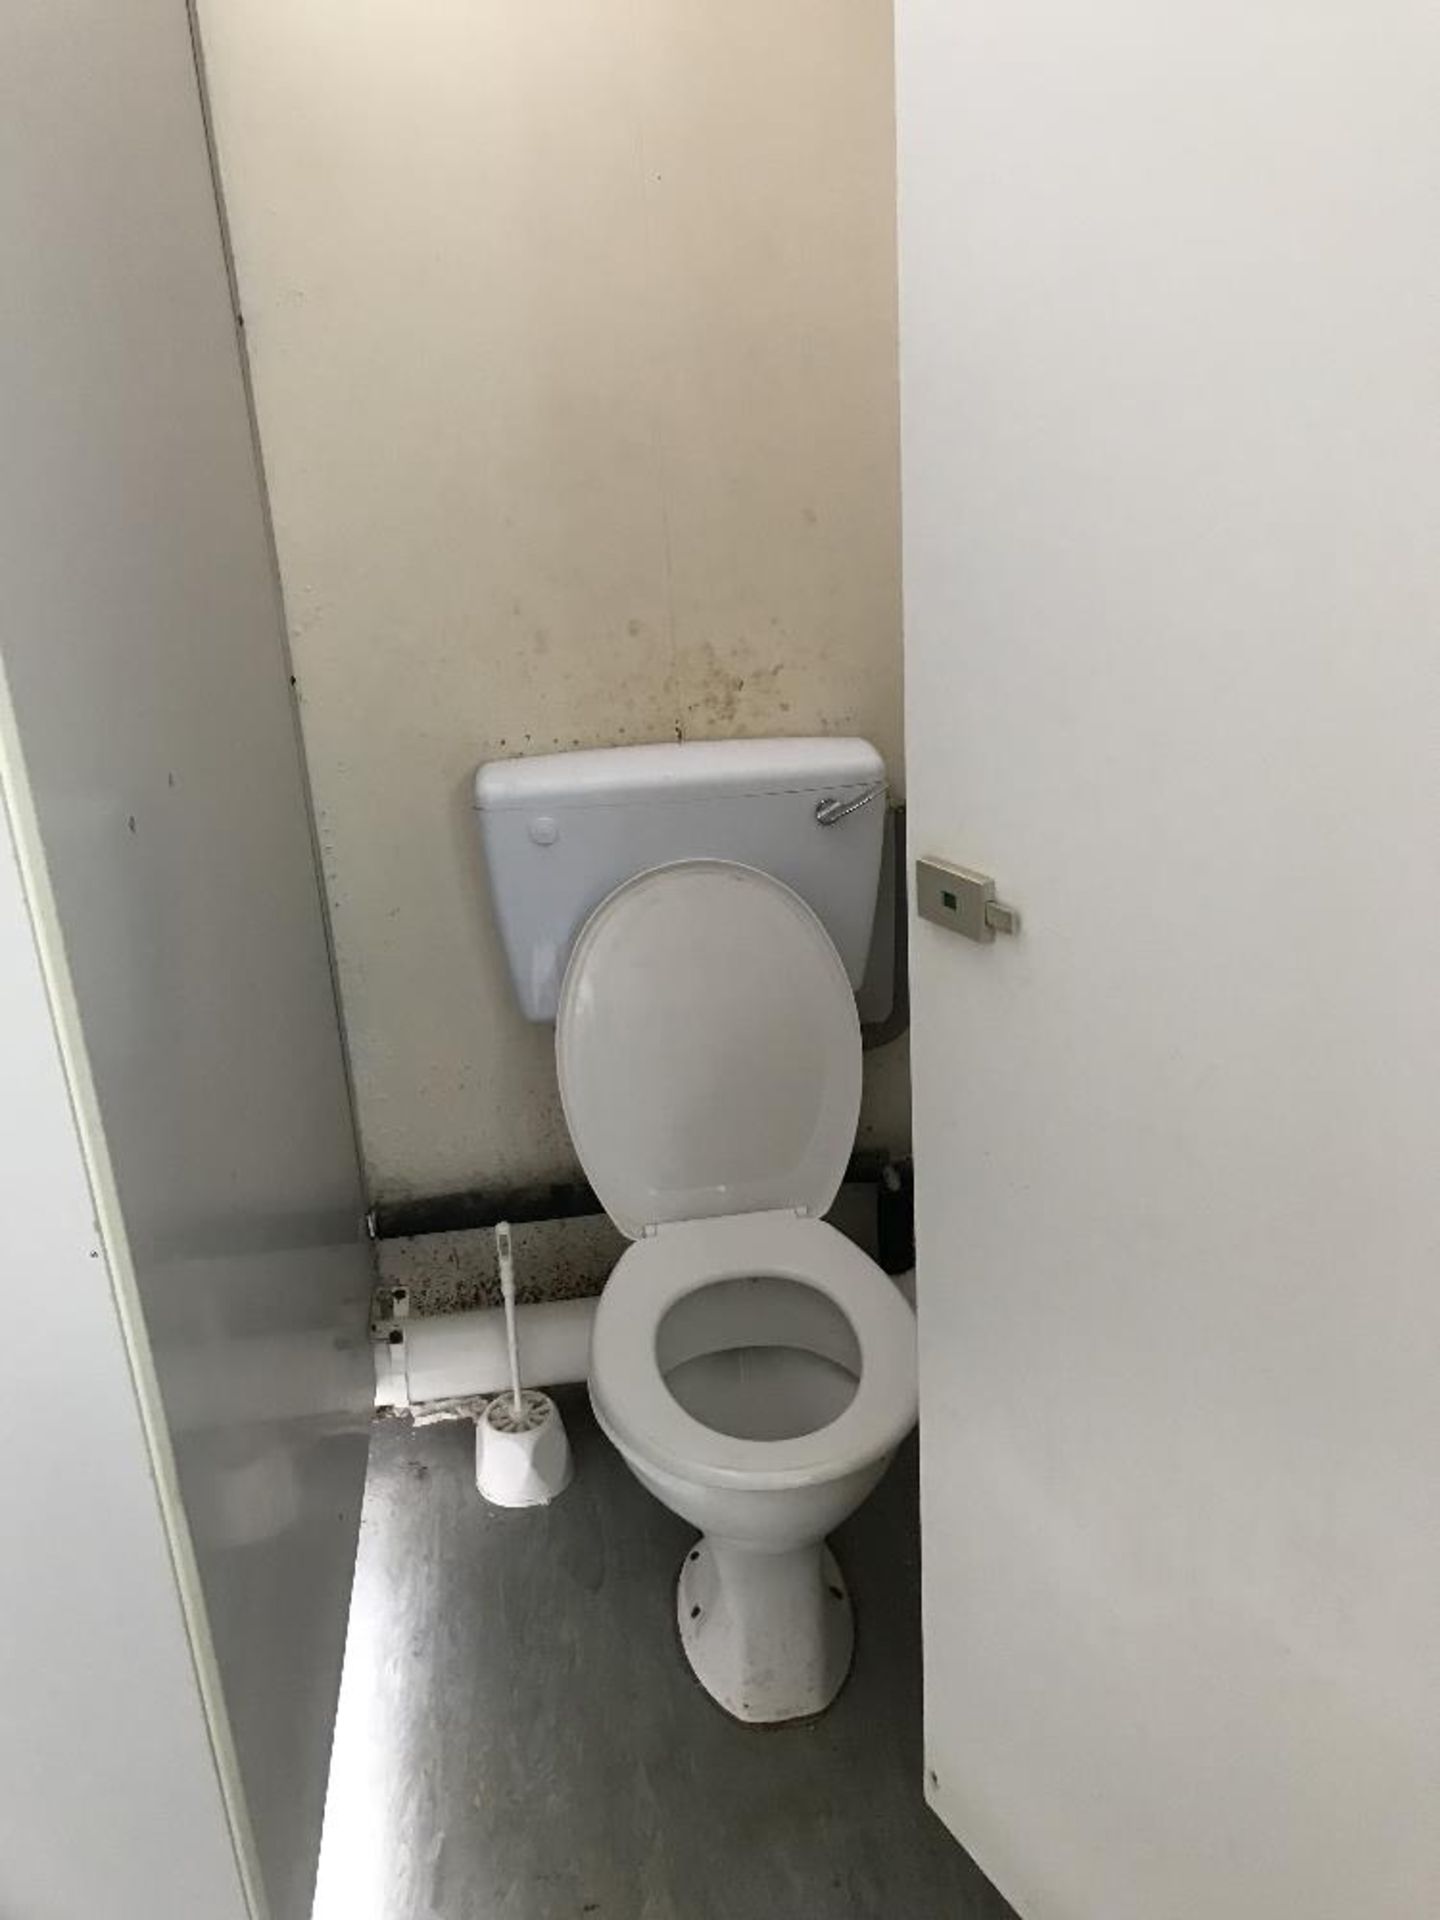 Portacabin jack legged staff toilet unit - Bild 9 aus 12